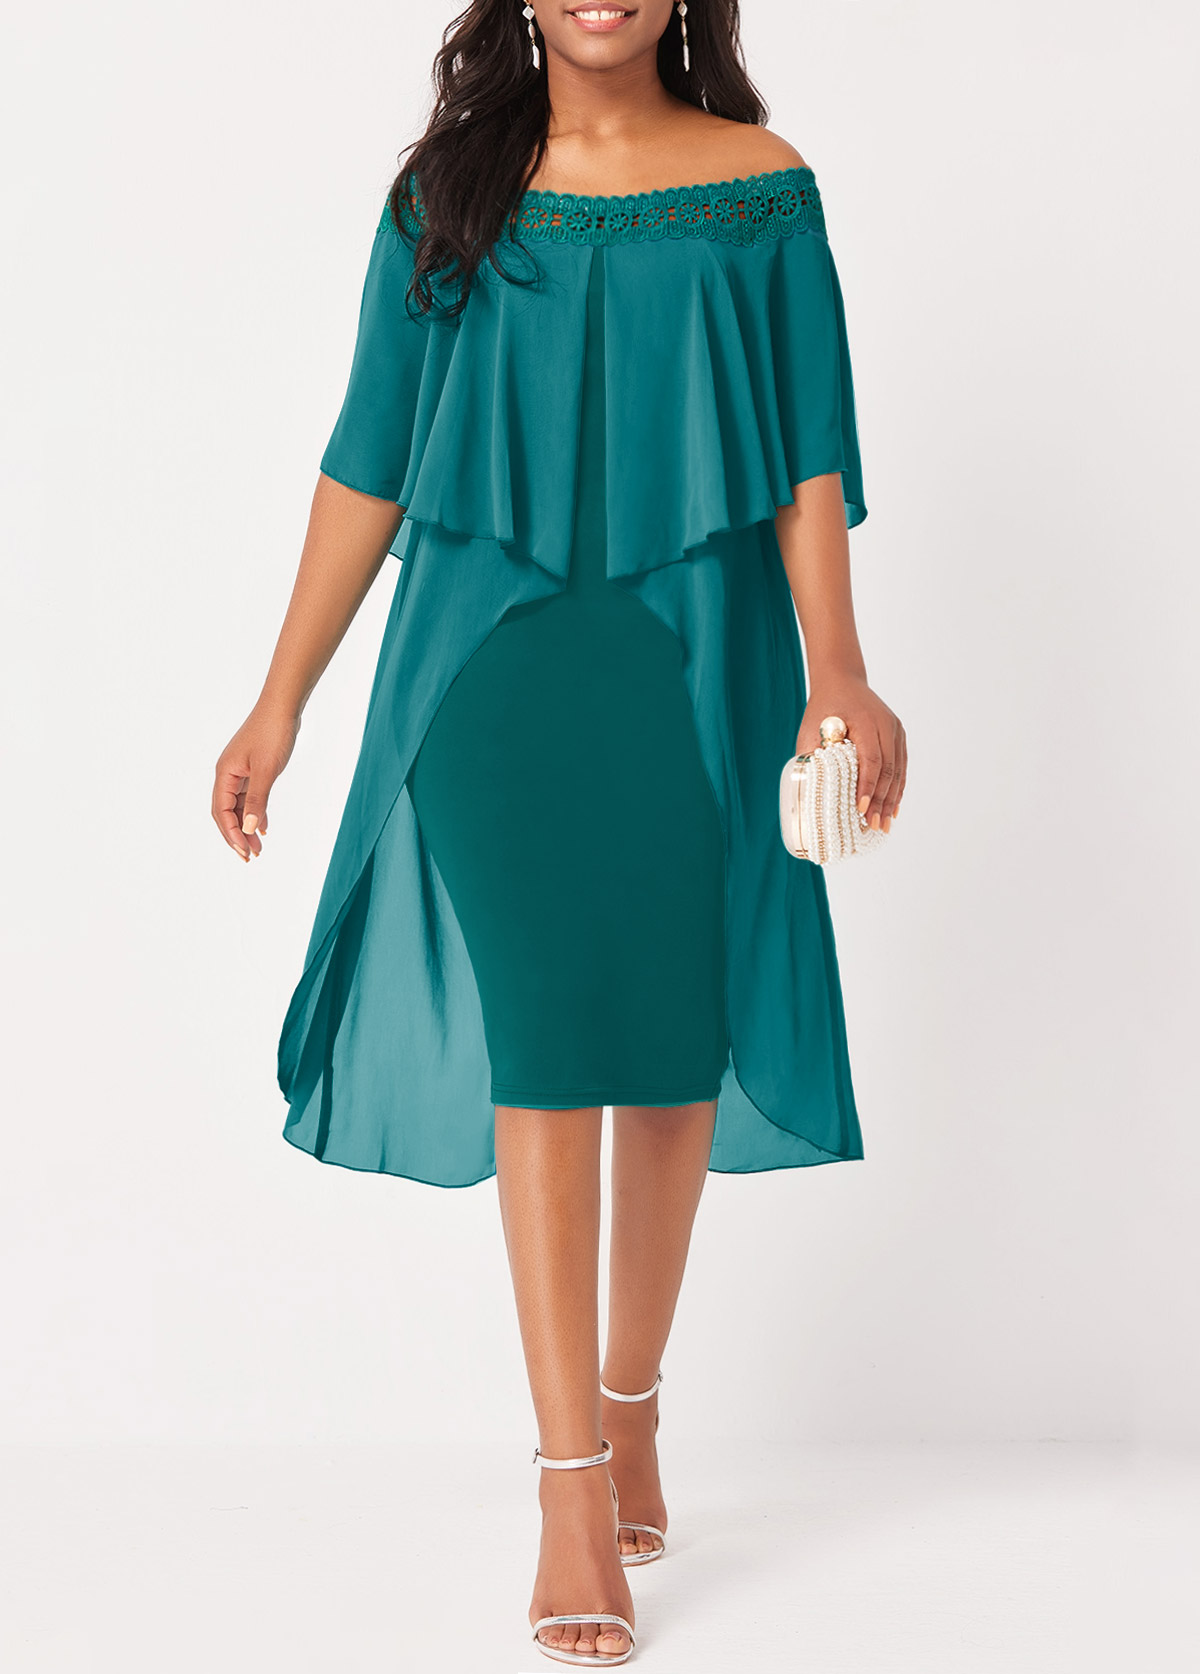 ROTITA Off Shoulder Turquoise Lace Stitching Flounce Dress